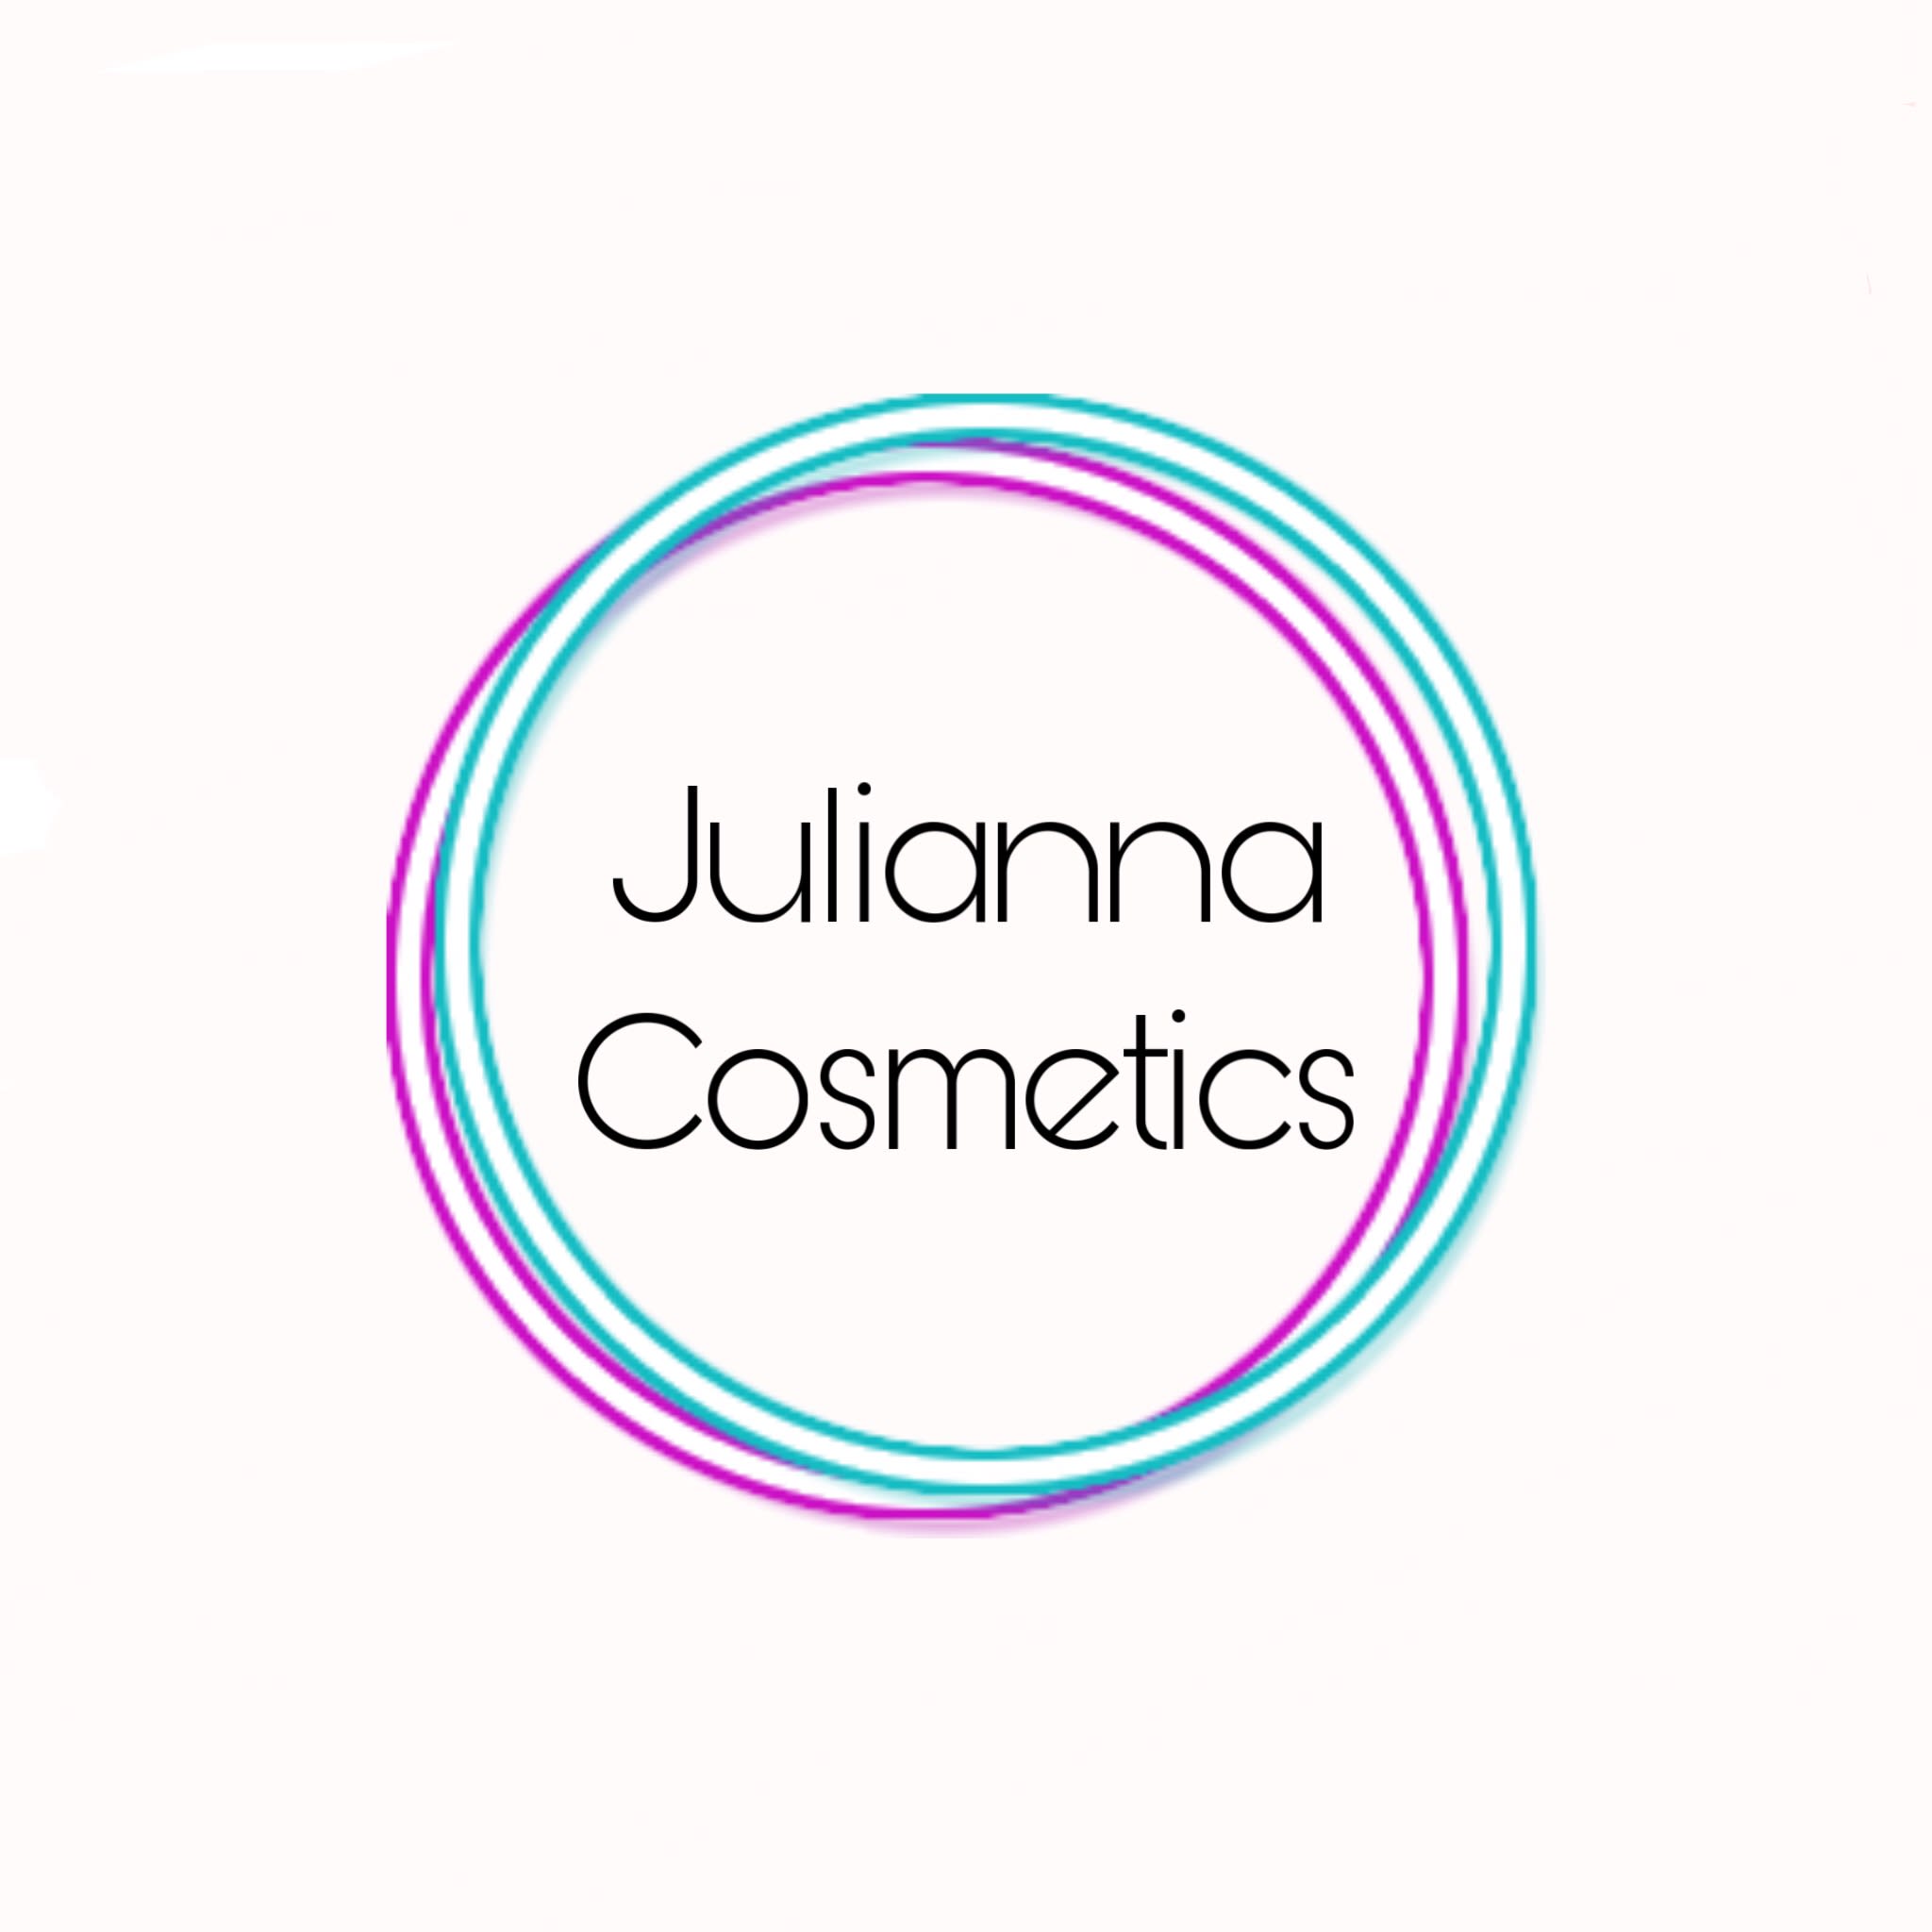 Julianna Cosmetics